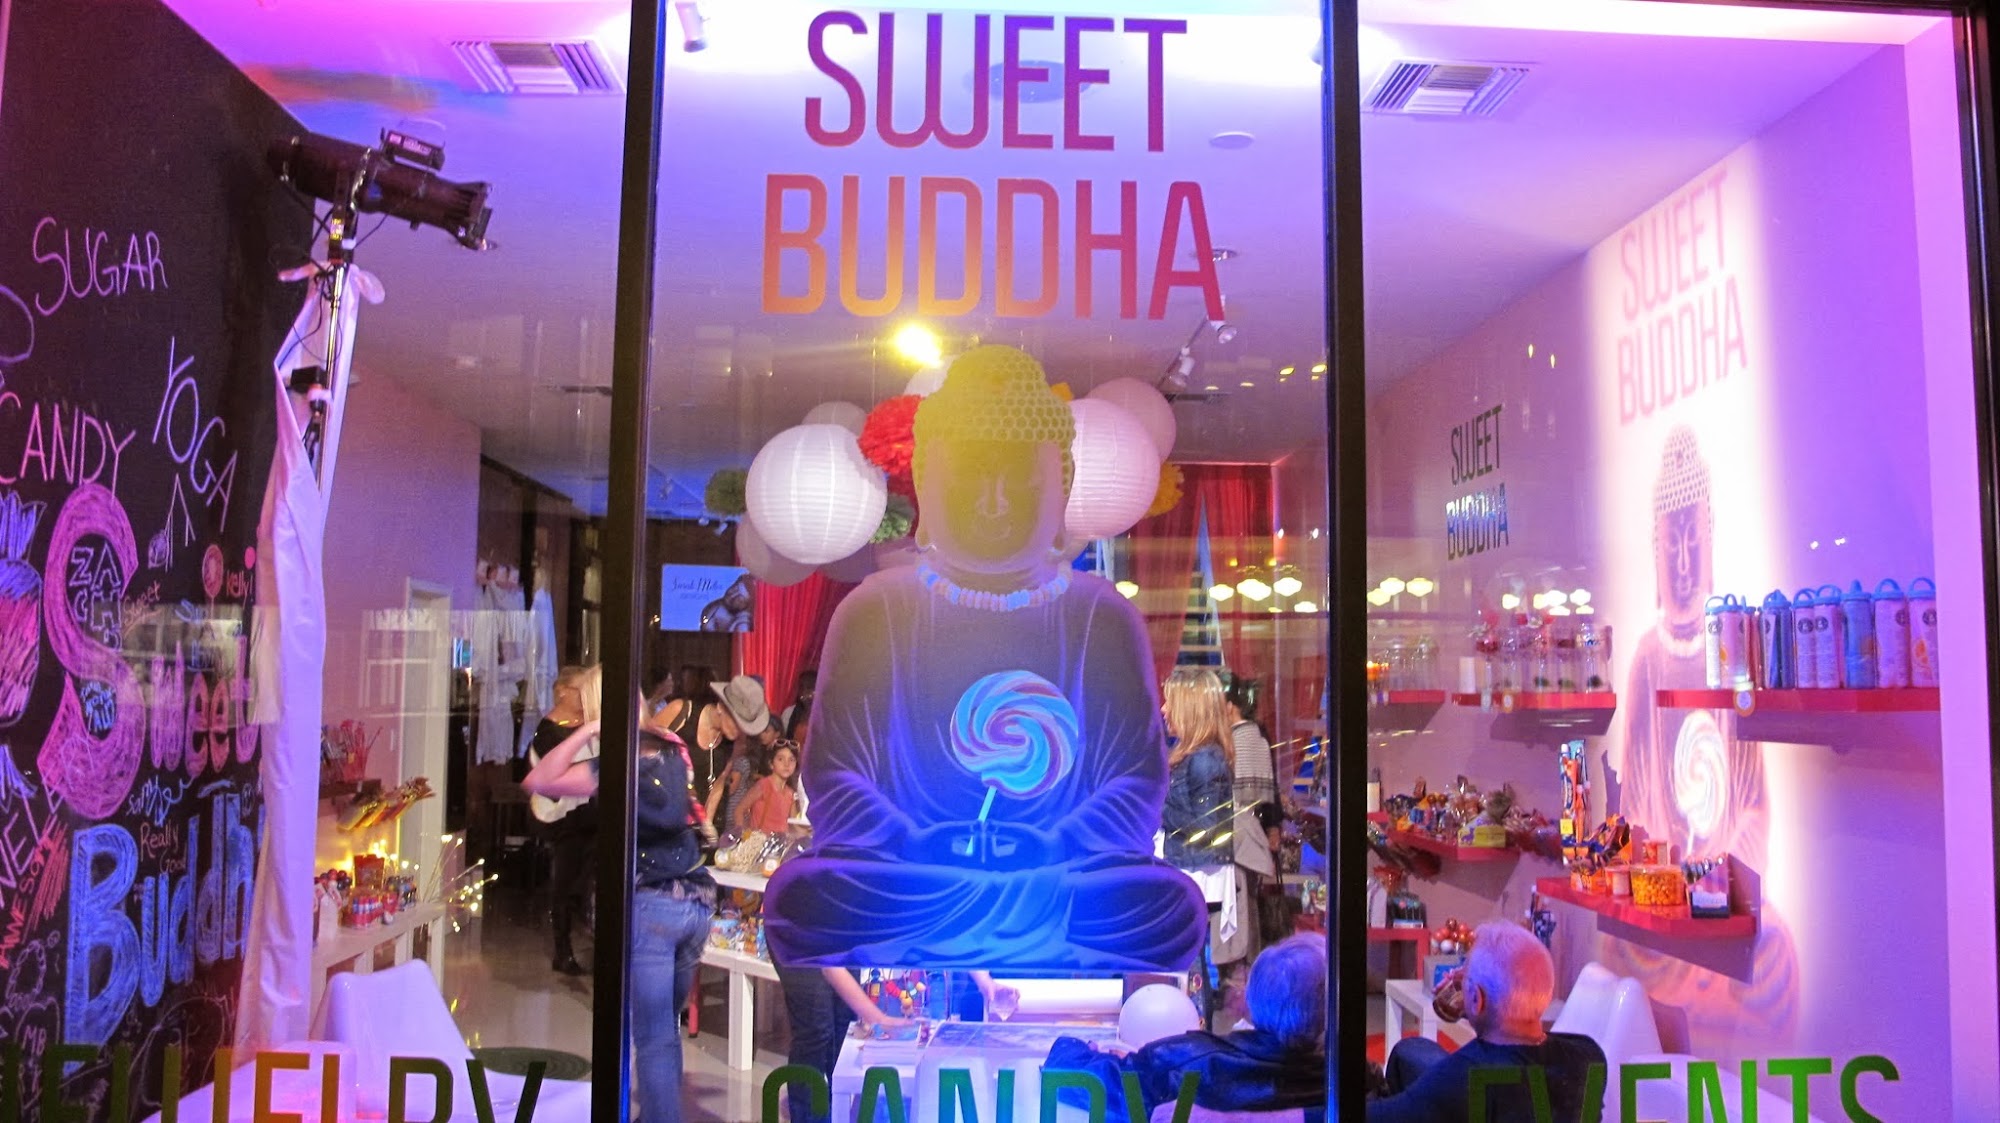 Sweet Buddha